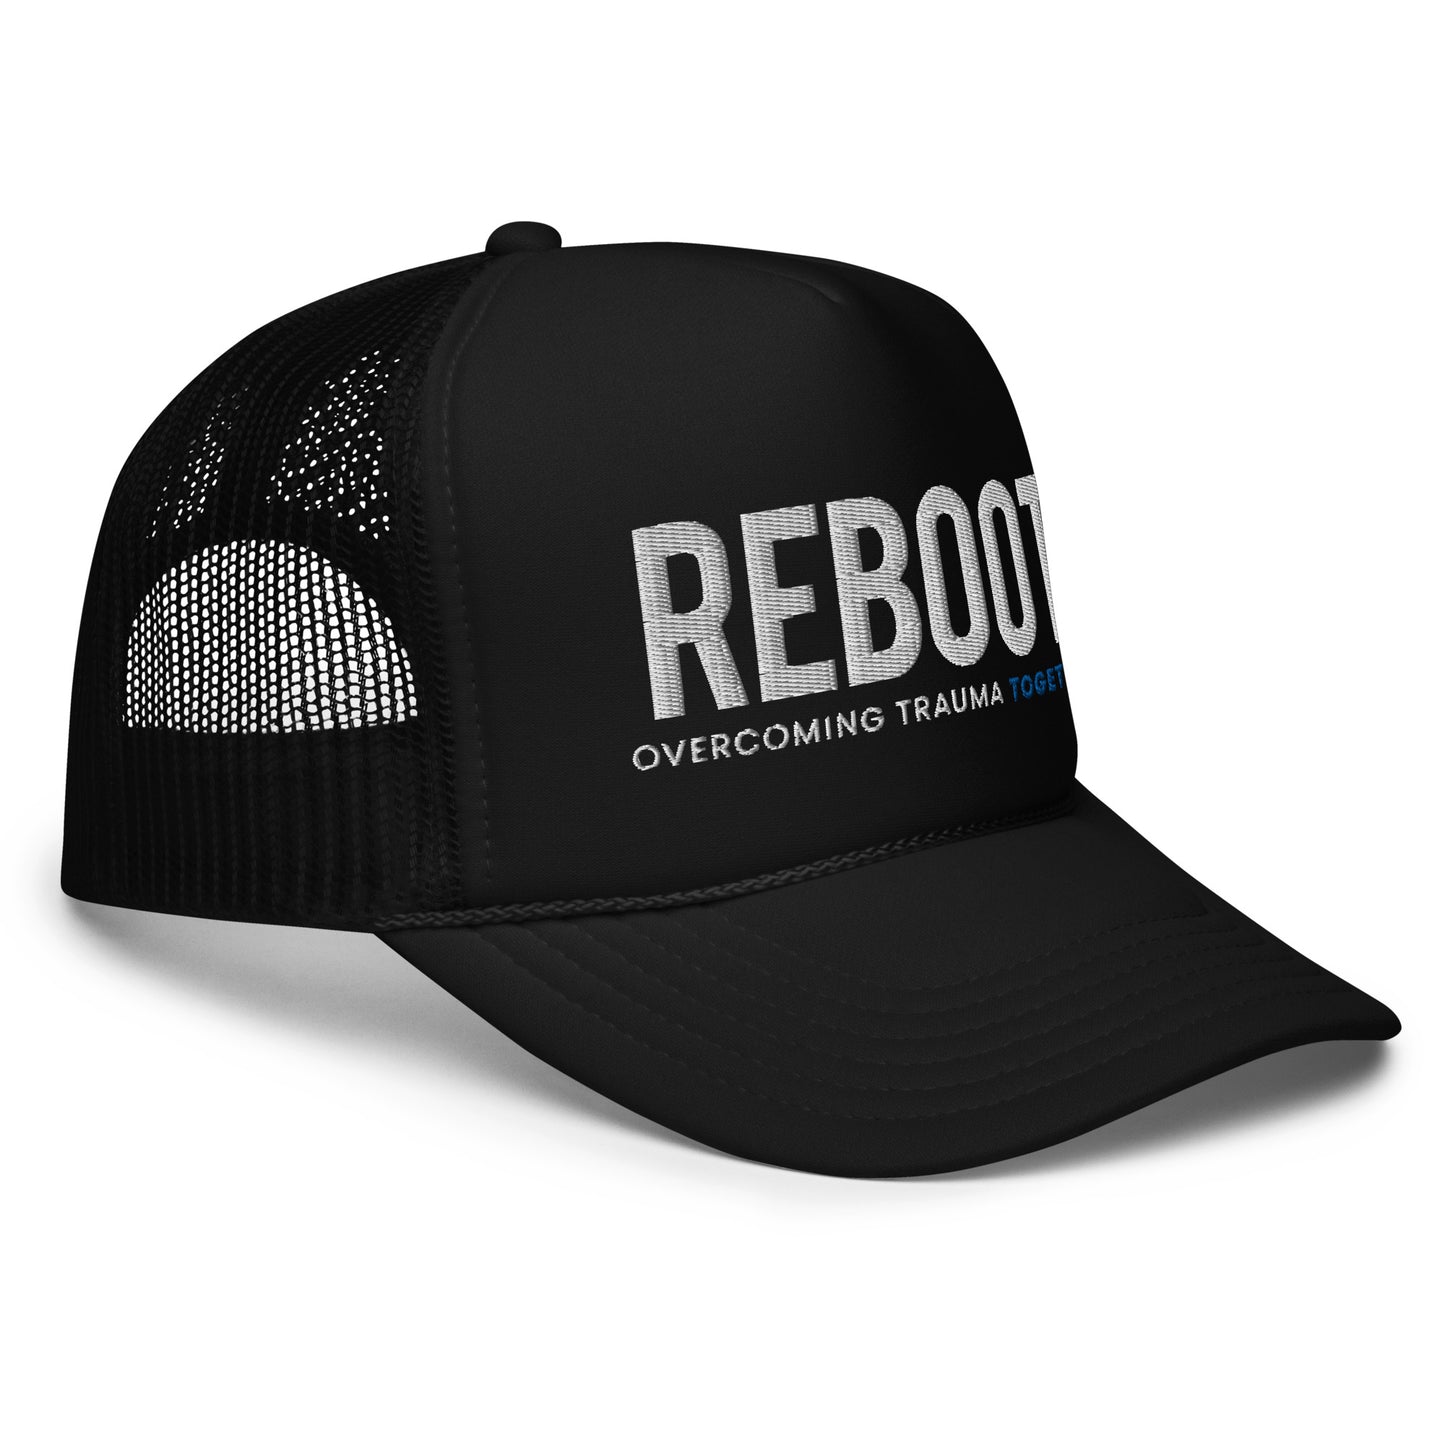 REBOOT Overcoming Trauma Together Foam Trucker Hat